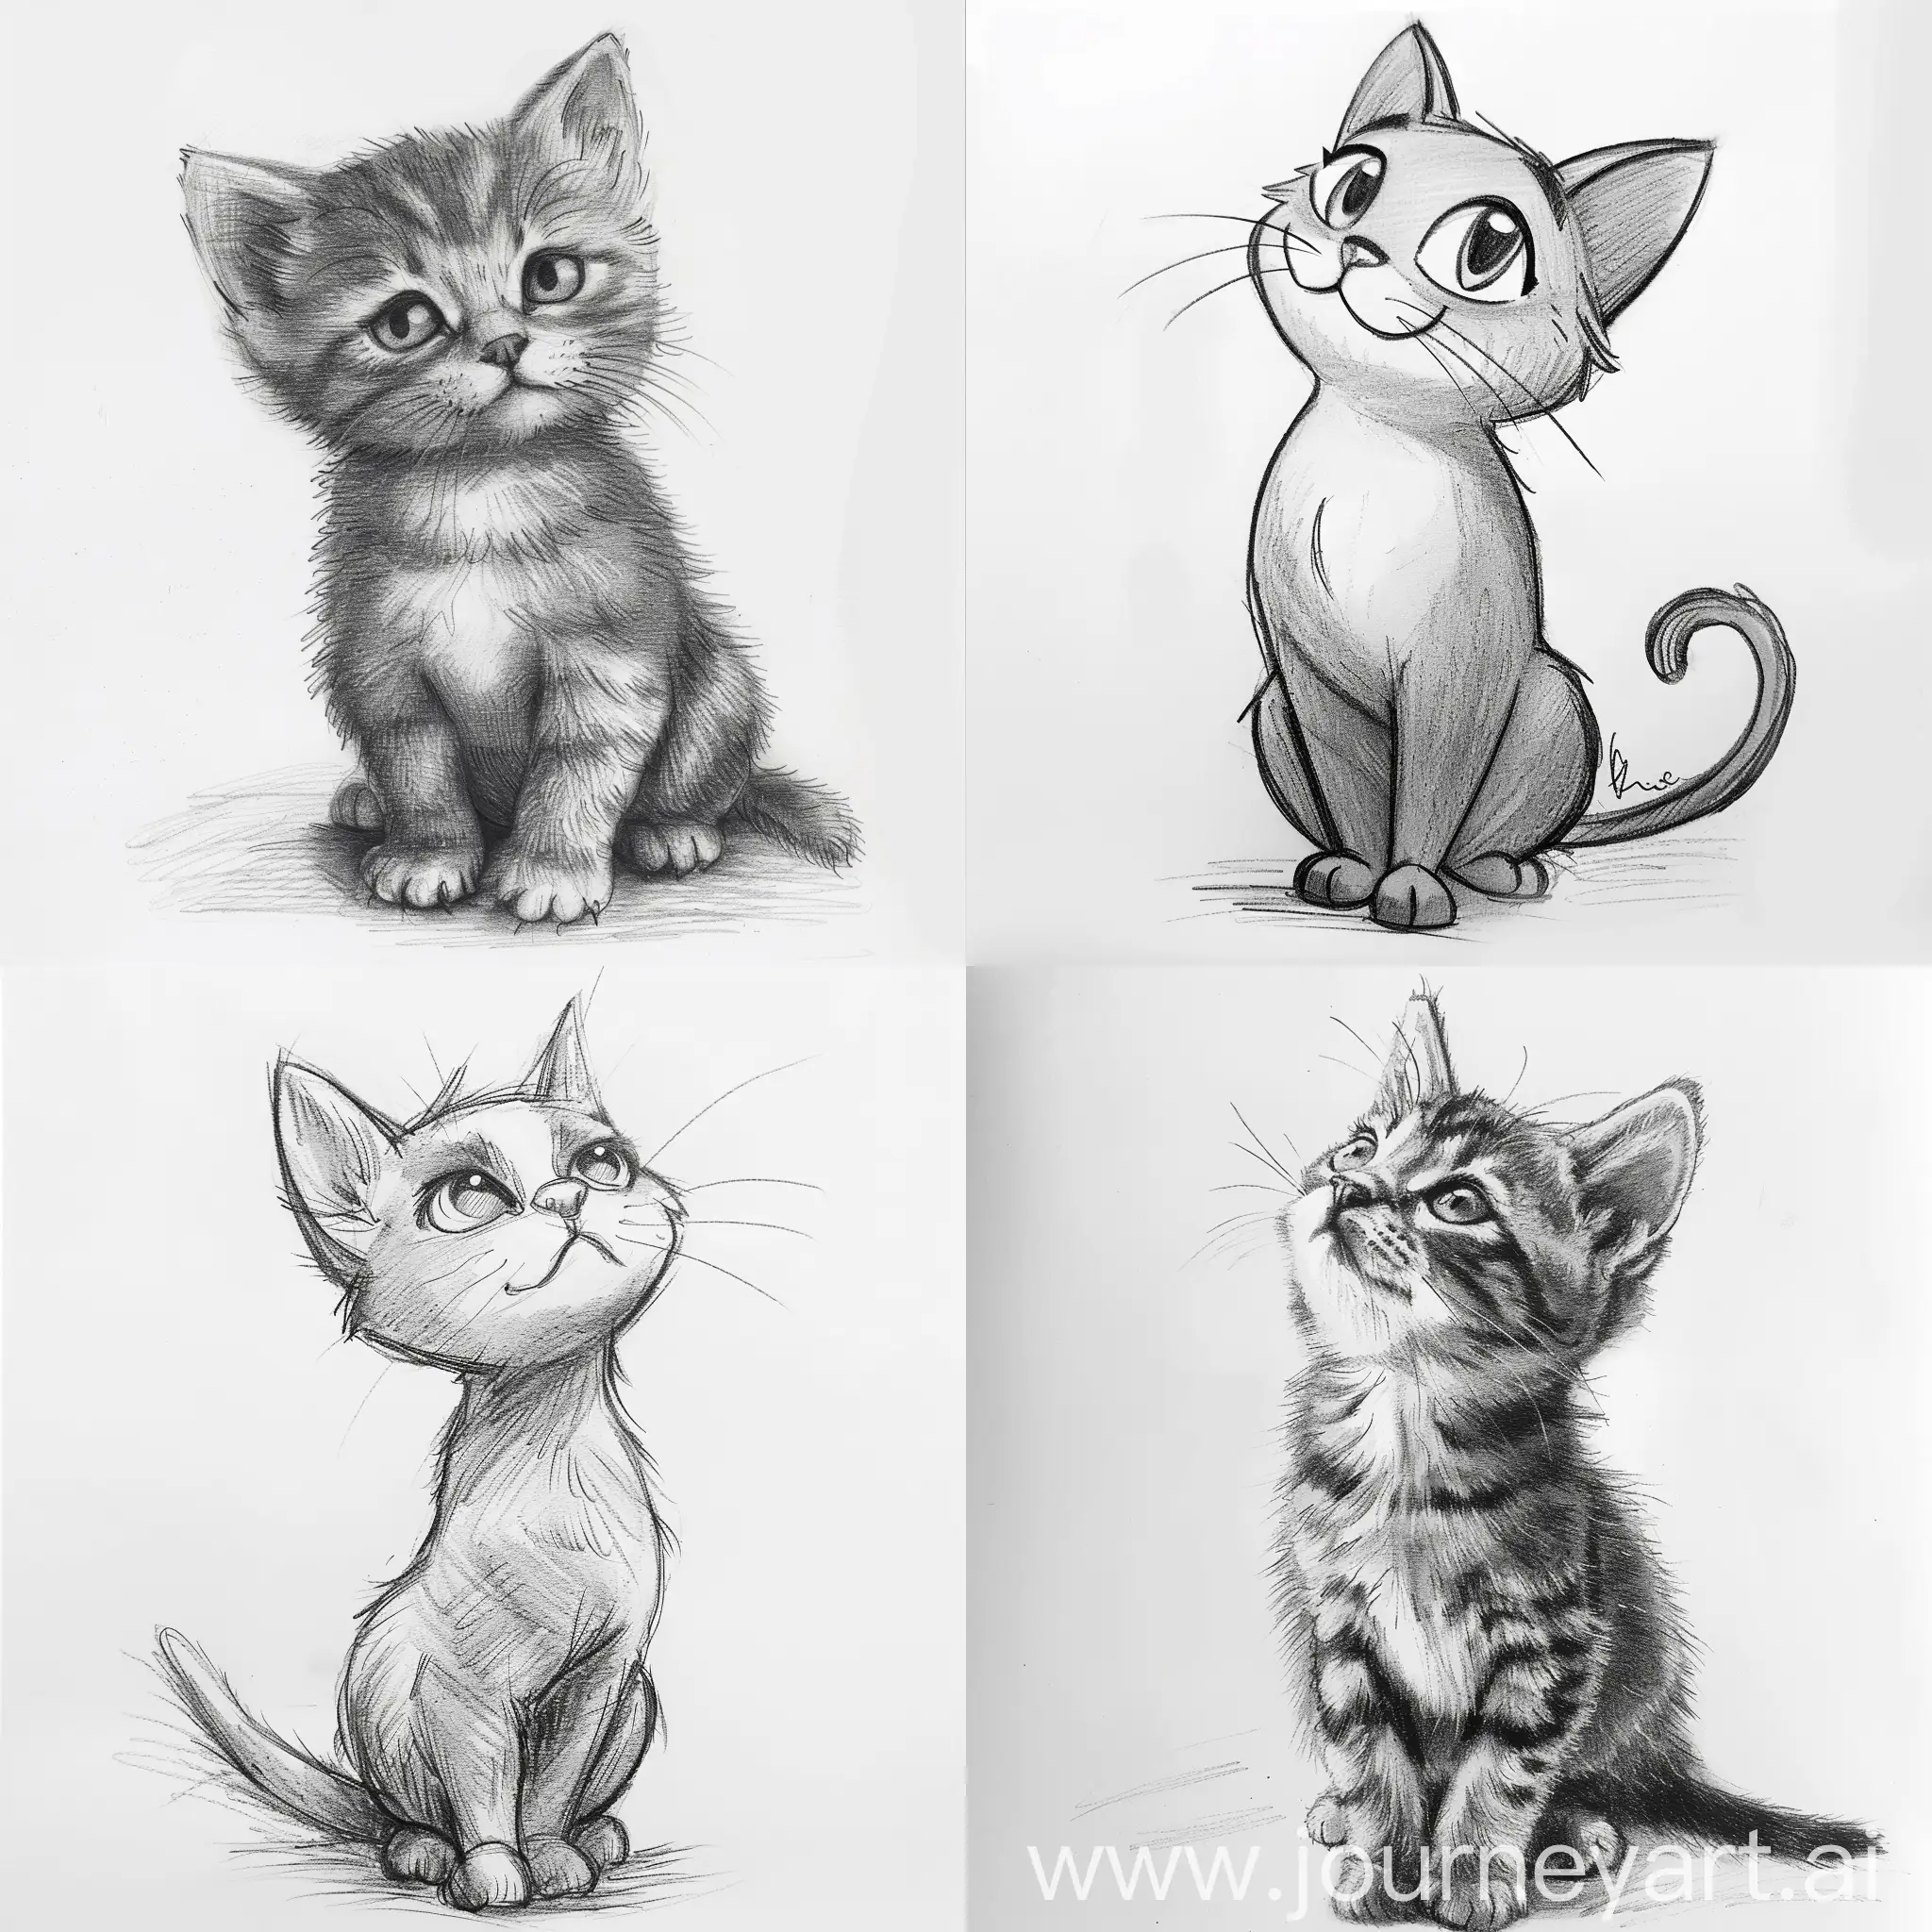 Adorable-Little-Cat-Drawing-Playful-Kitten-Illustration